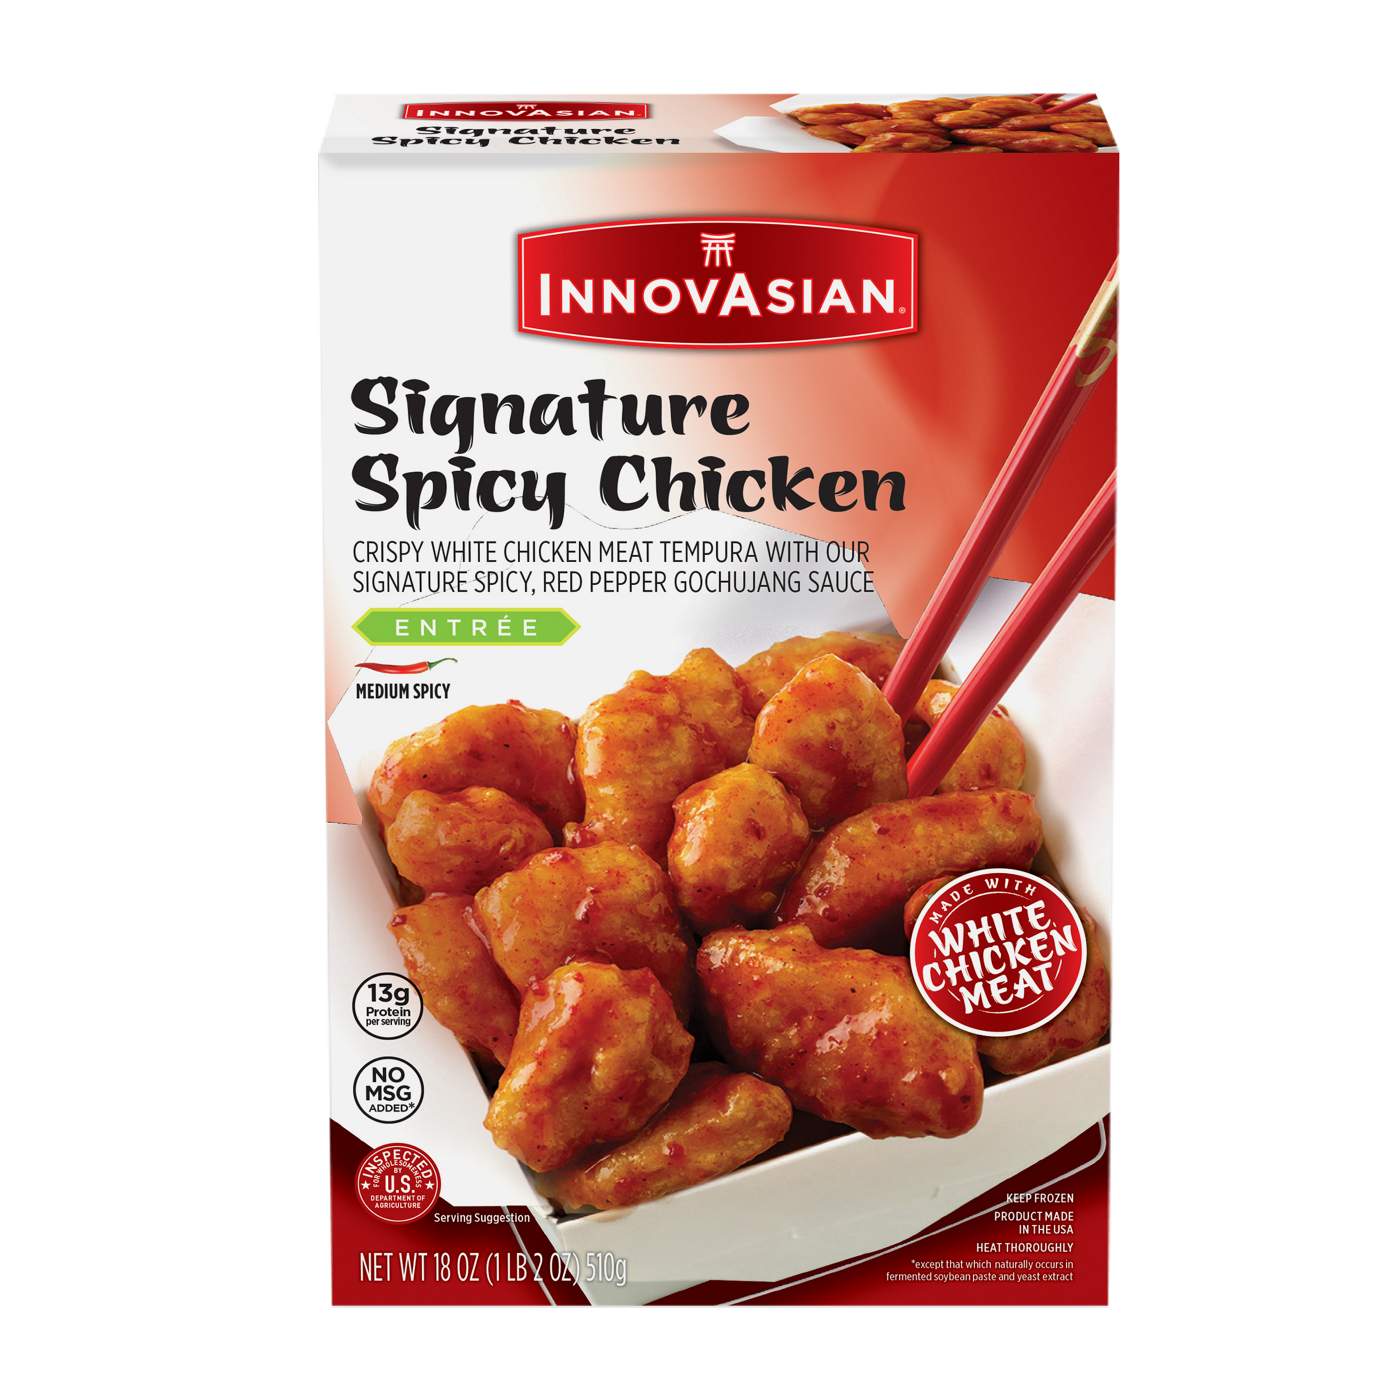 InnovAsian Frozen Signature Spicy Chicken; image 1 of 4